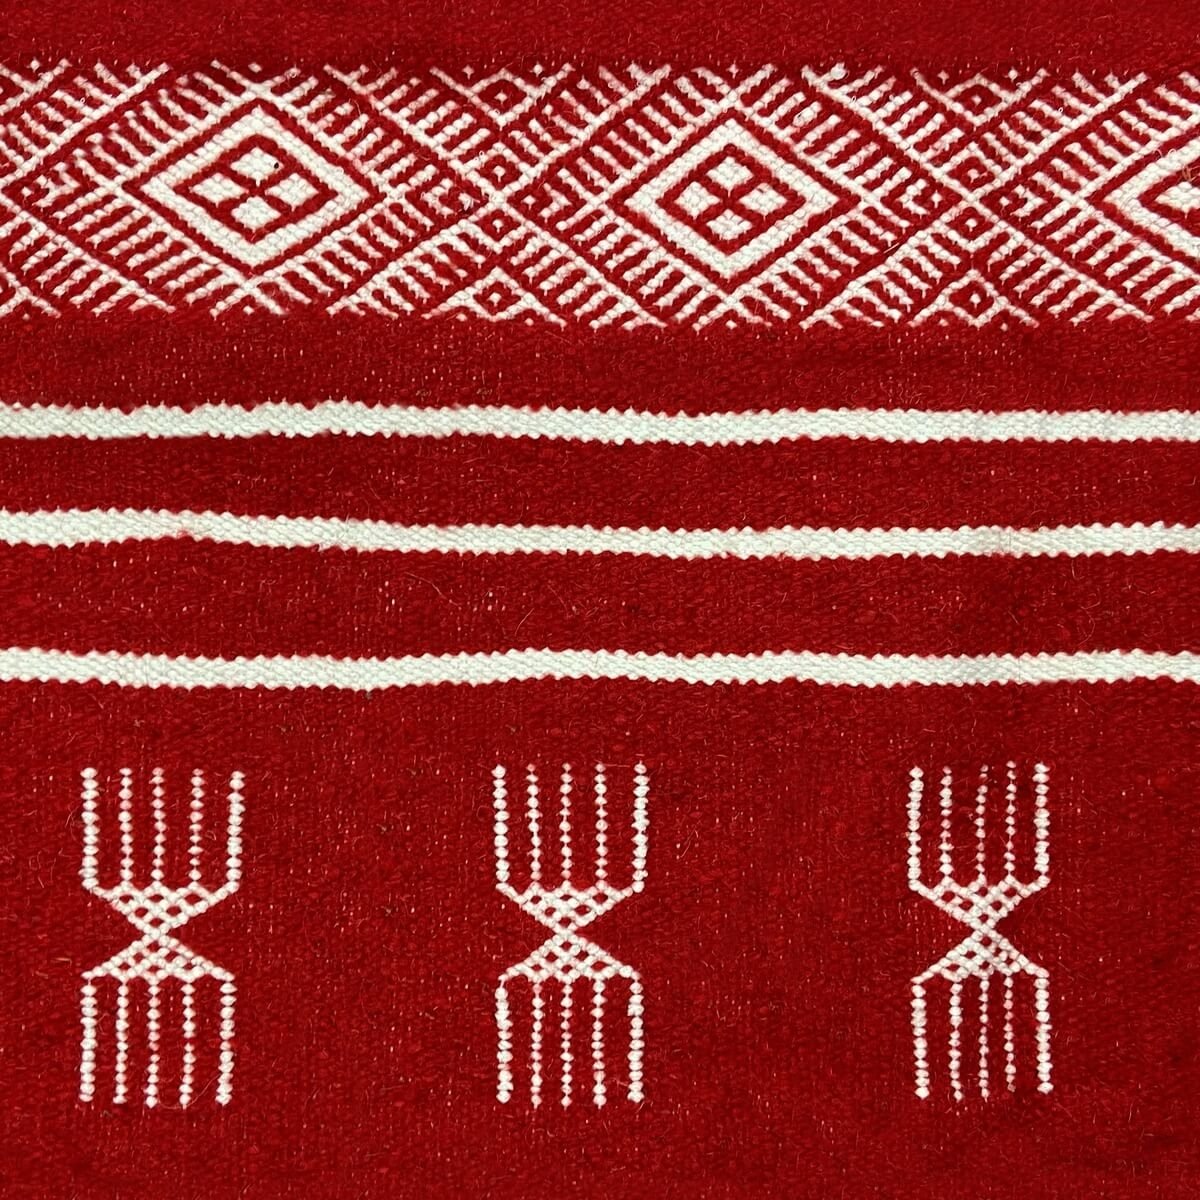 Berber tapijt Tapijt Kilim Kazrach 107x204 Rood (Handgeweven, Wol, Tunesië) Tunesisch kilimdeken, Marokkaanse stijl. Rechthoekig